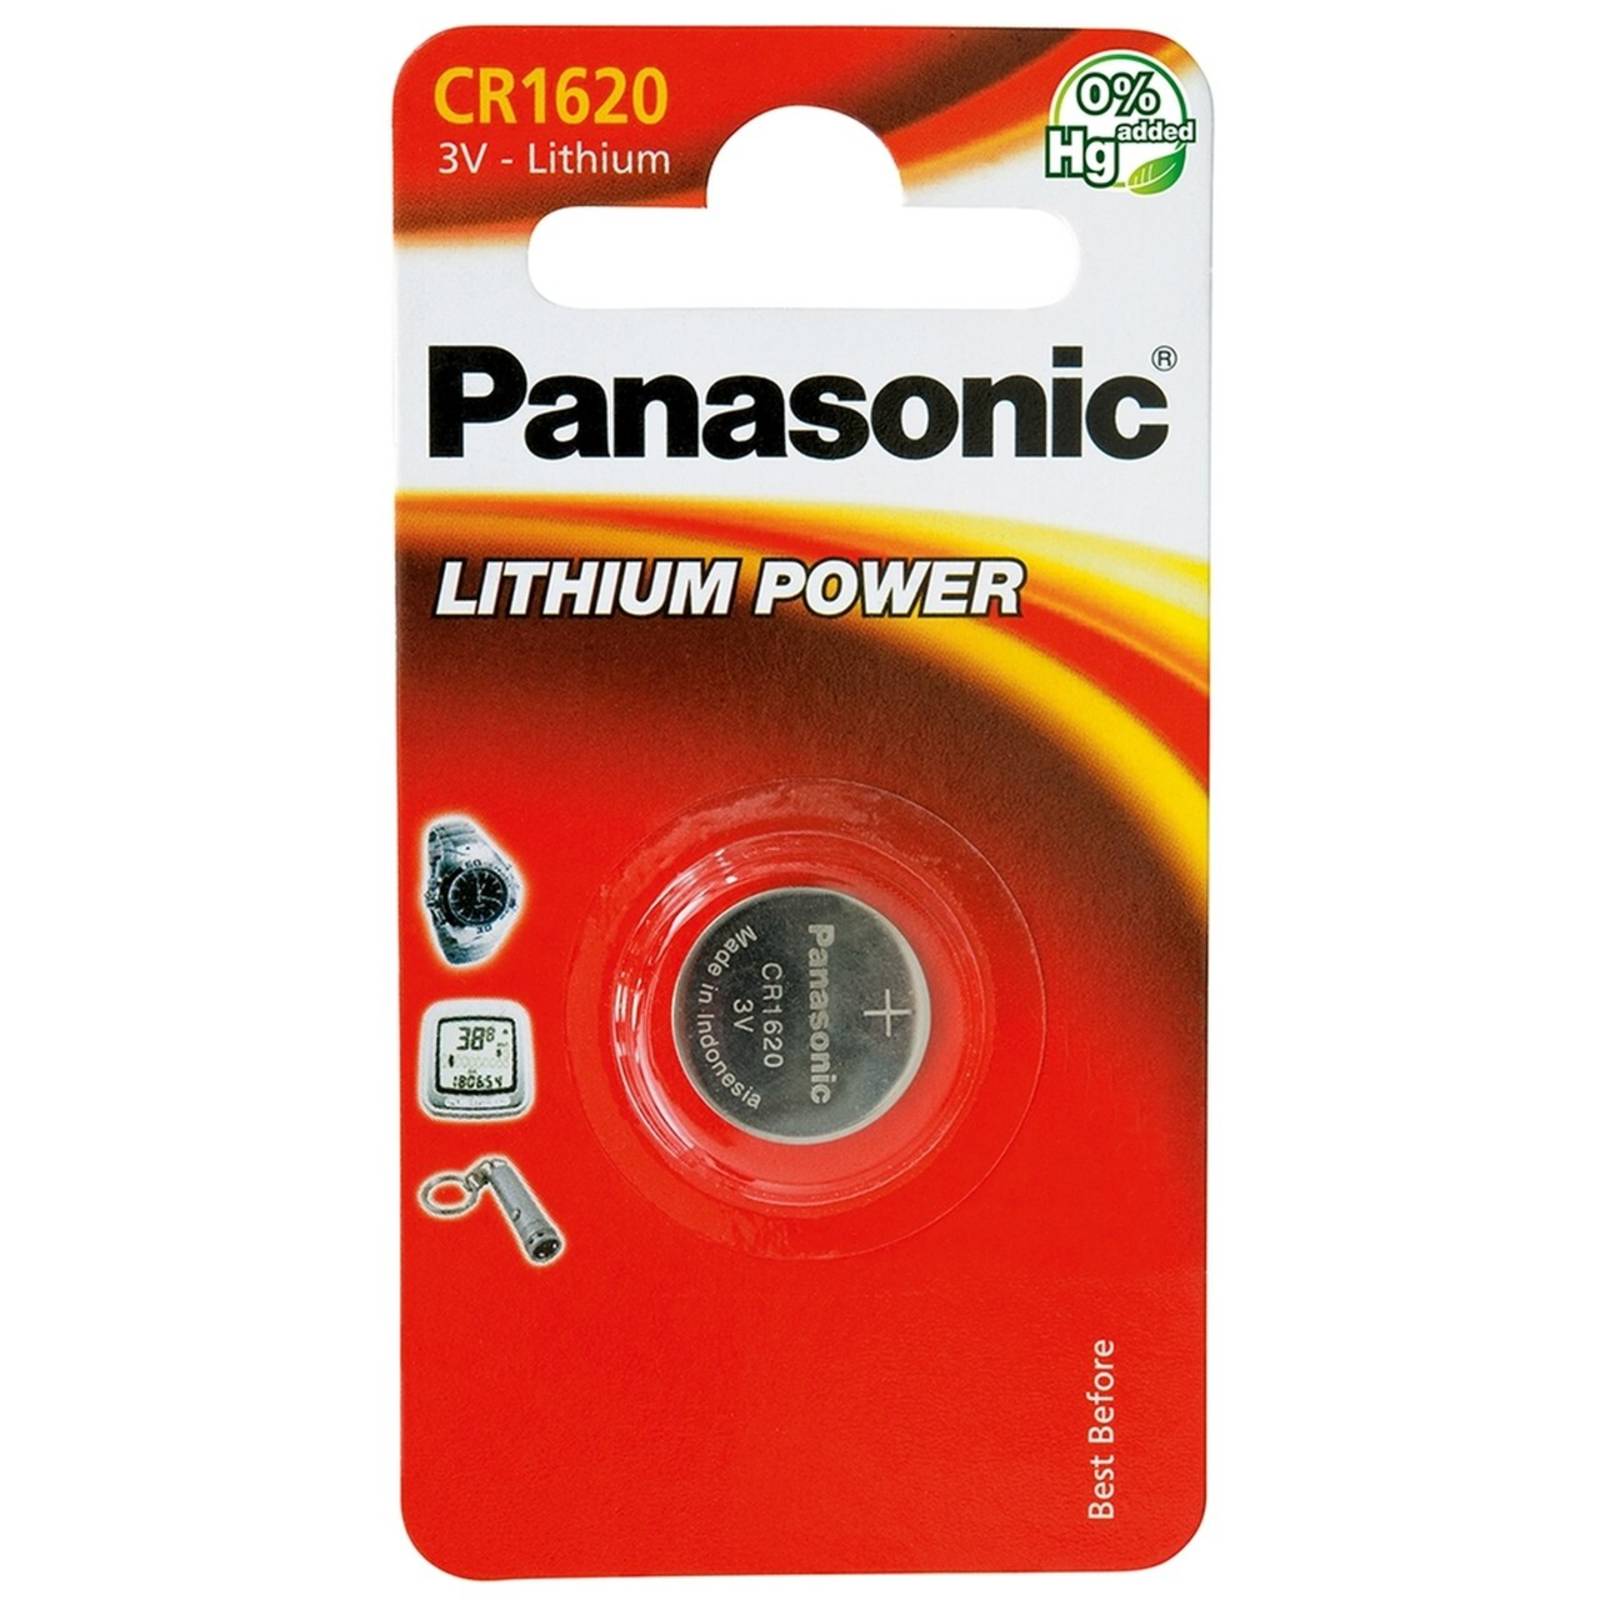 Panasonic CR1620 Single 3v Lithium Coin Cell Battery